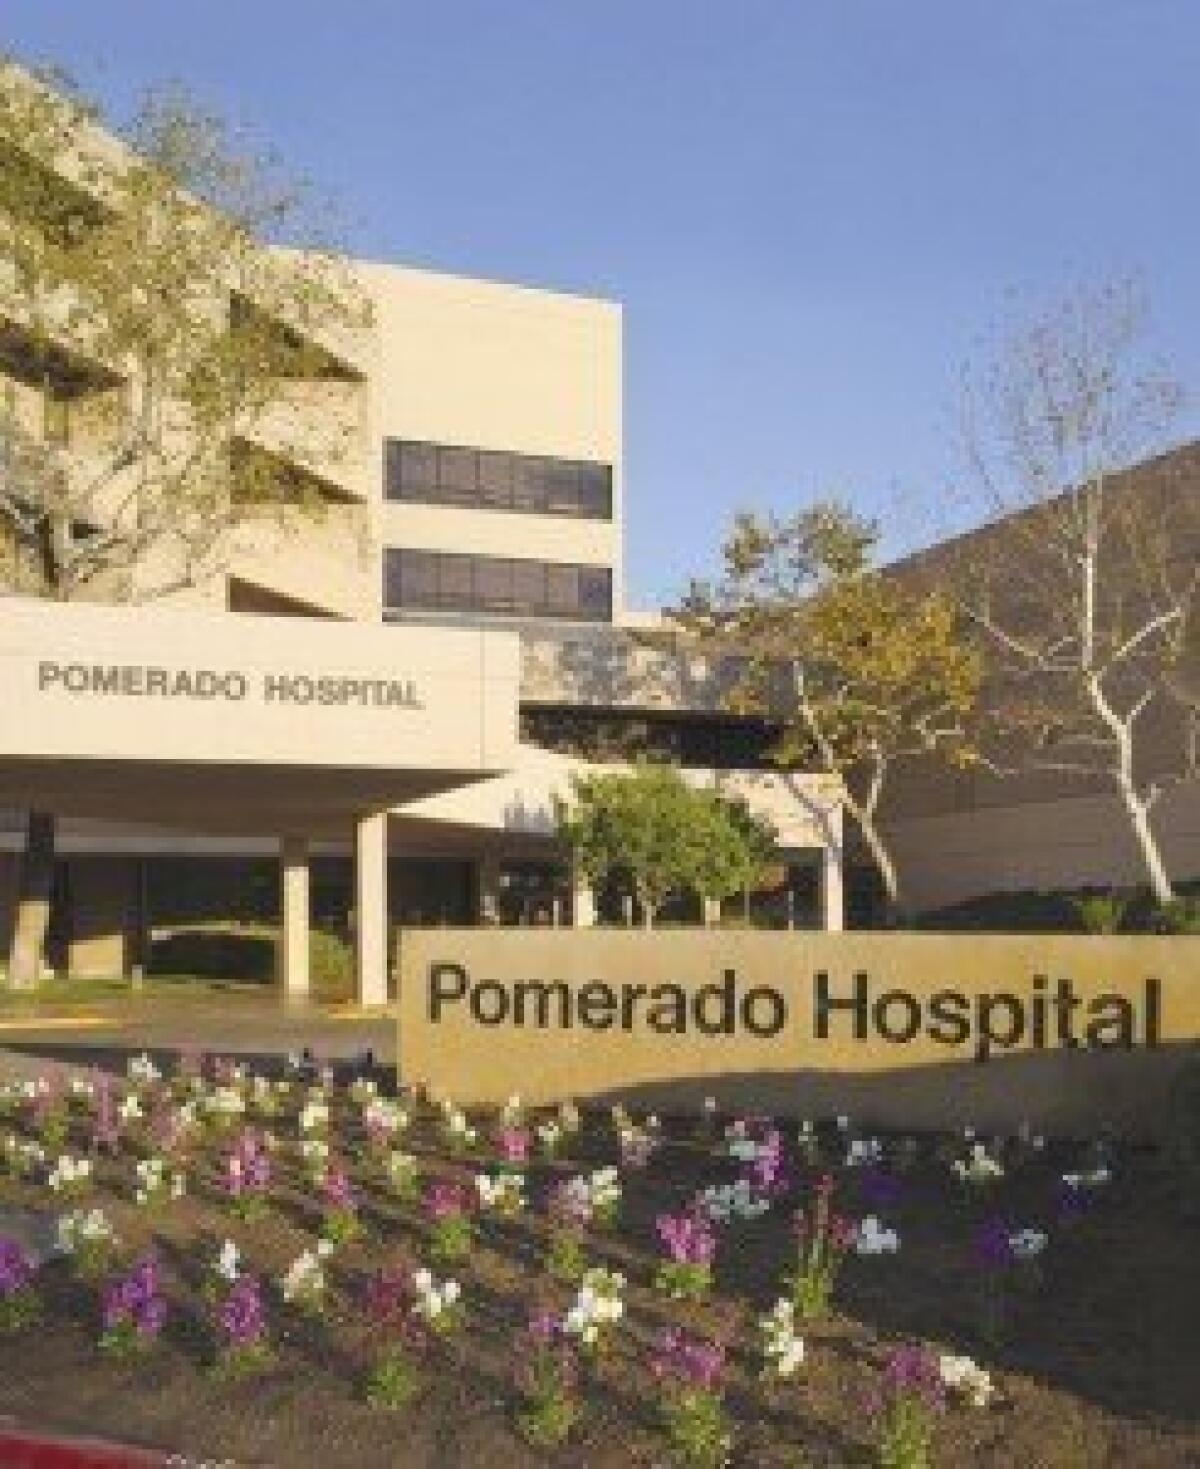 Pomerado Hospital, a part of Palomar Health.